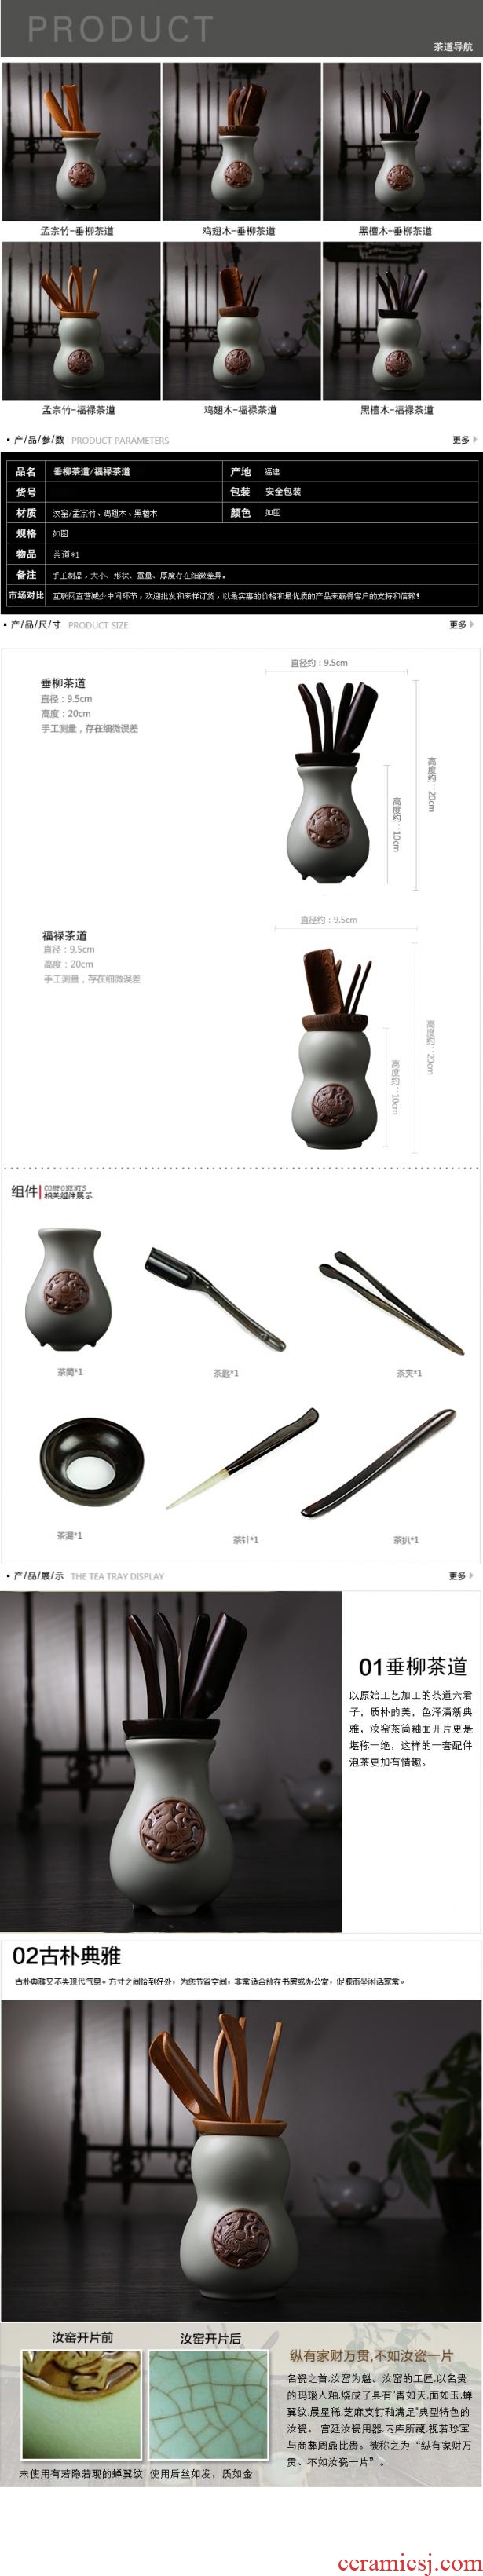 Chen xiang tea accessories your up ceramic tea six gentleman moso bamboo/ebony, chicken wings wood tea set